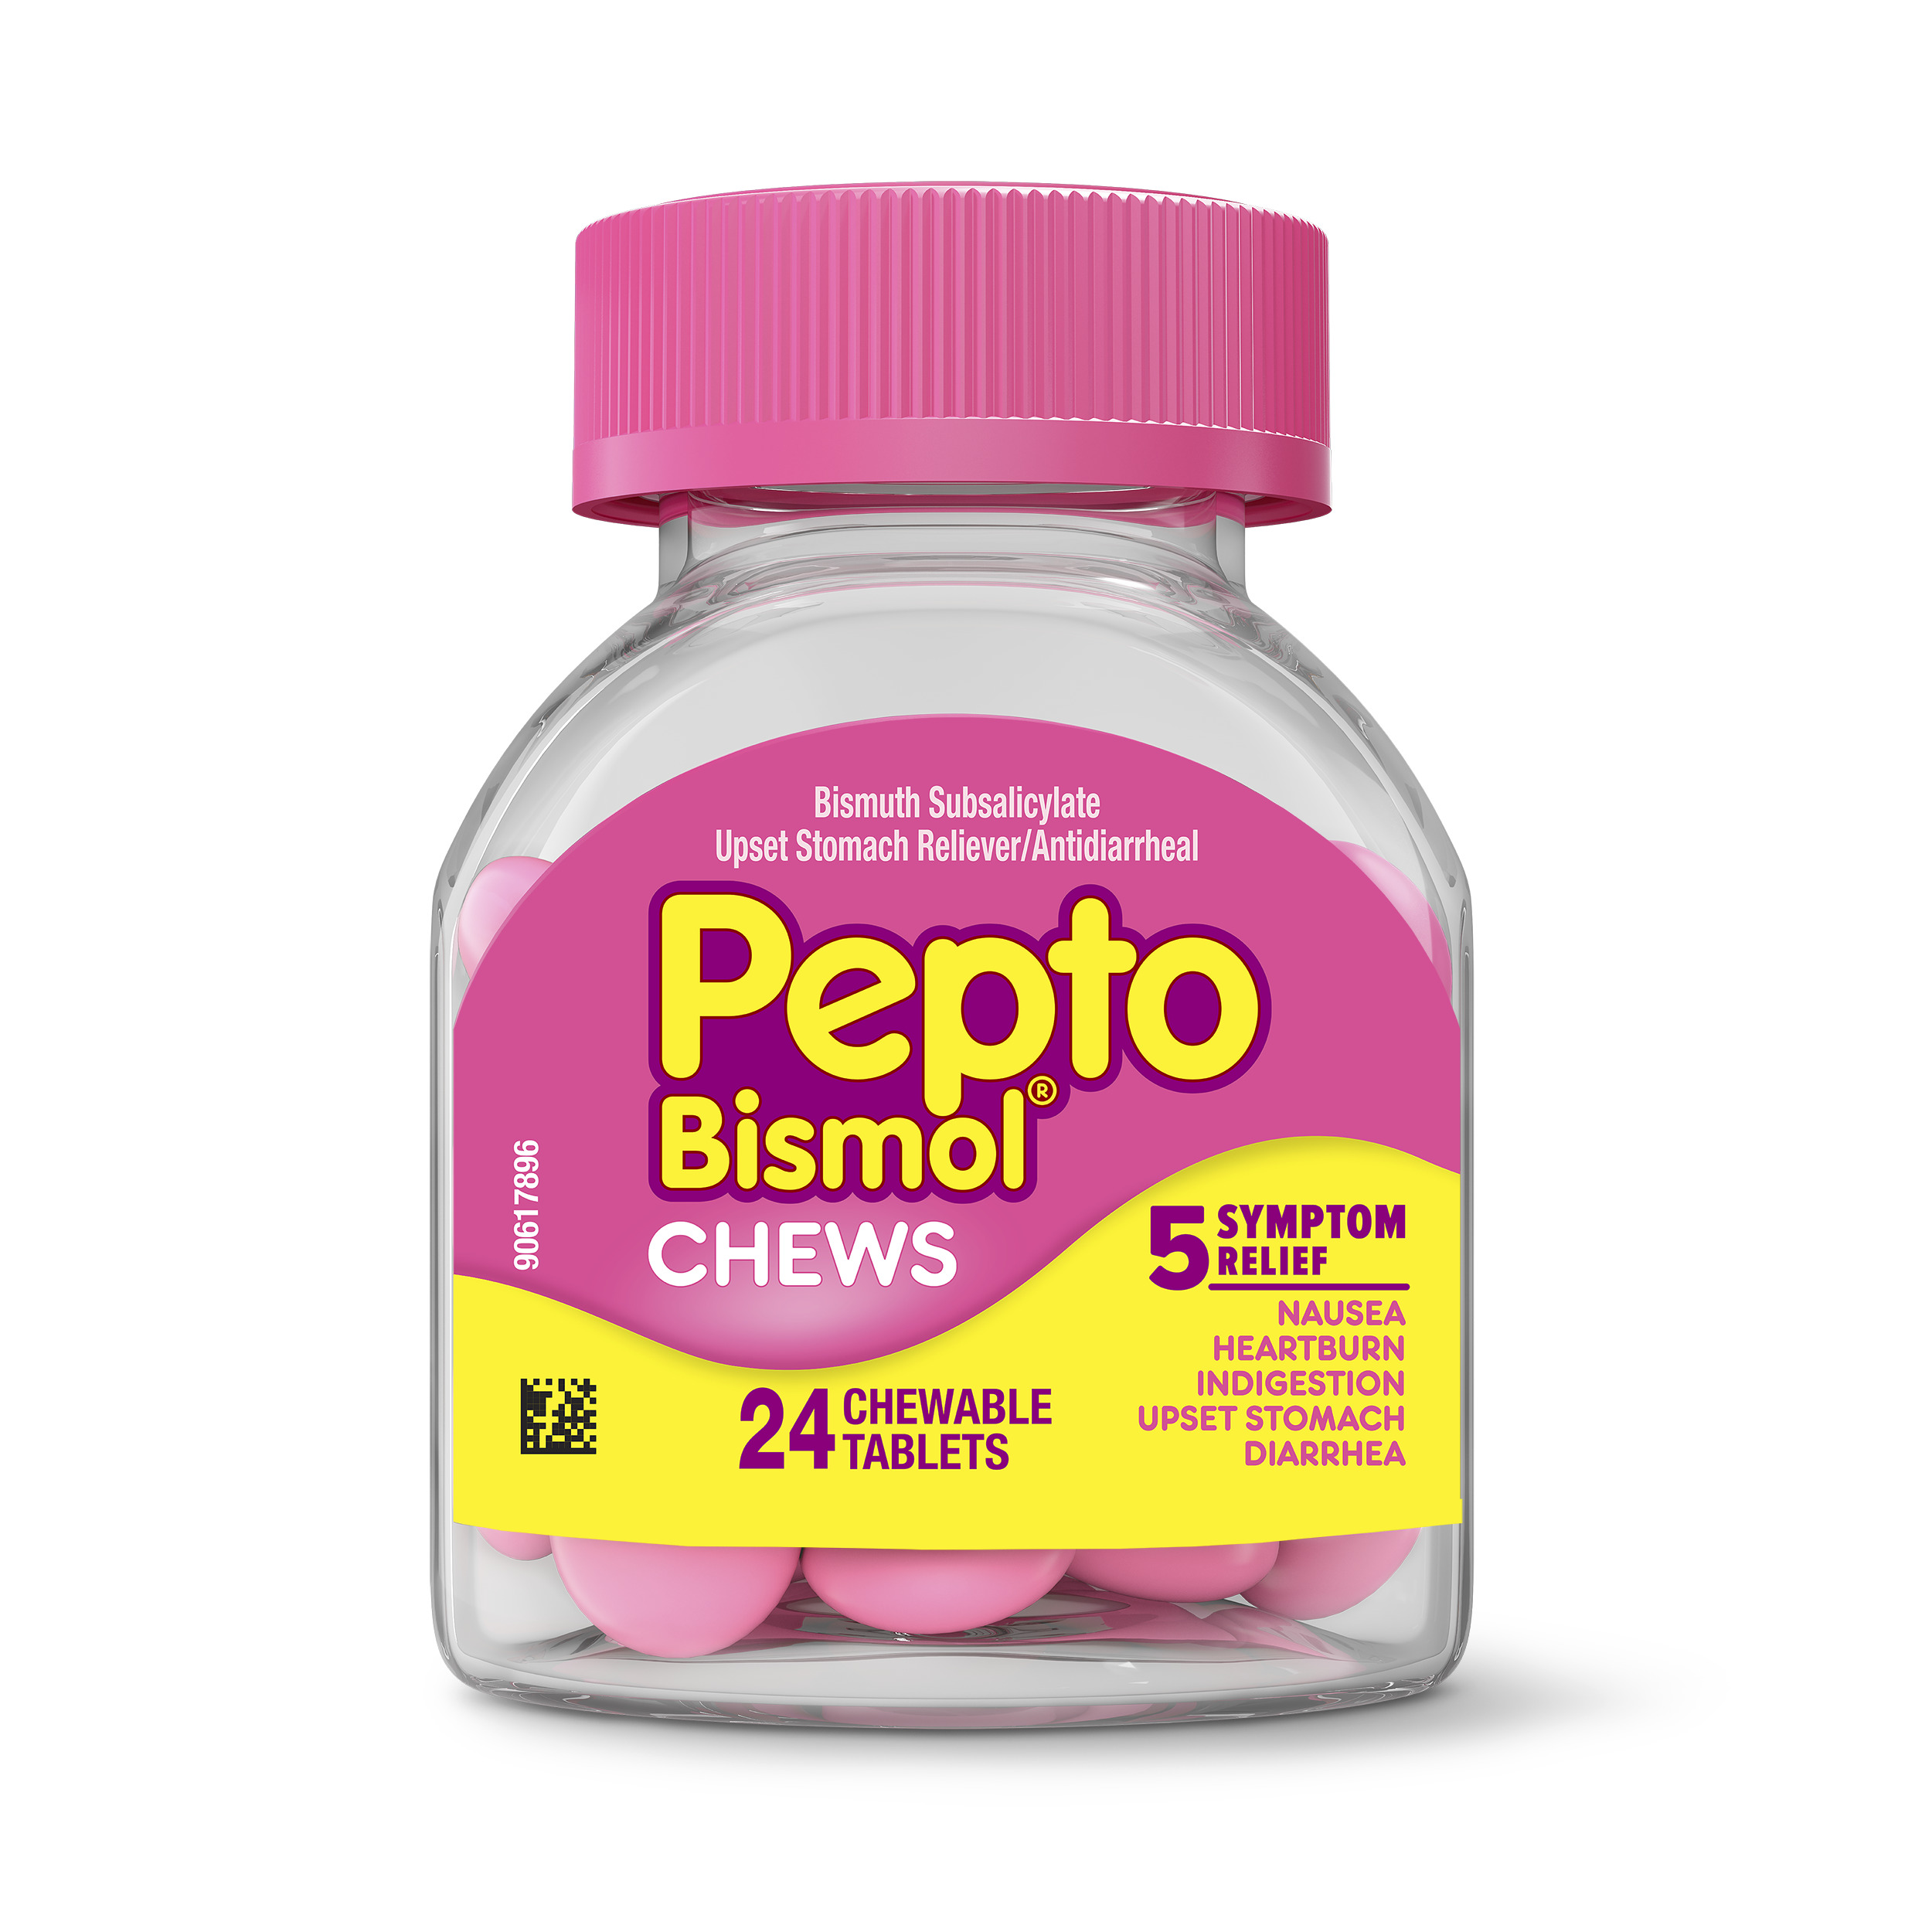 Pepto Bismol Chewable Tablets 5 Symptom Upset Stomach Relief, 24 ct.